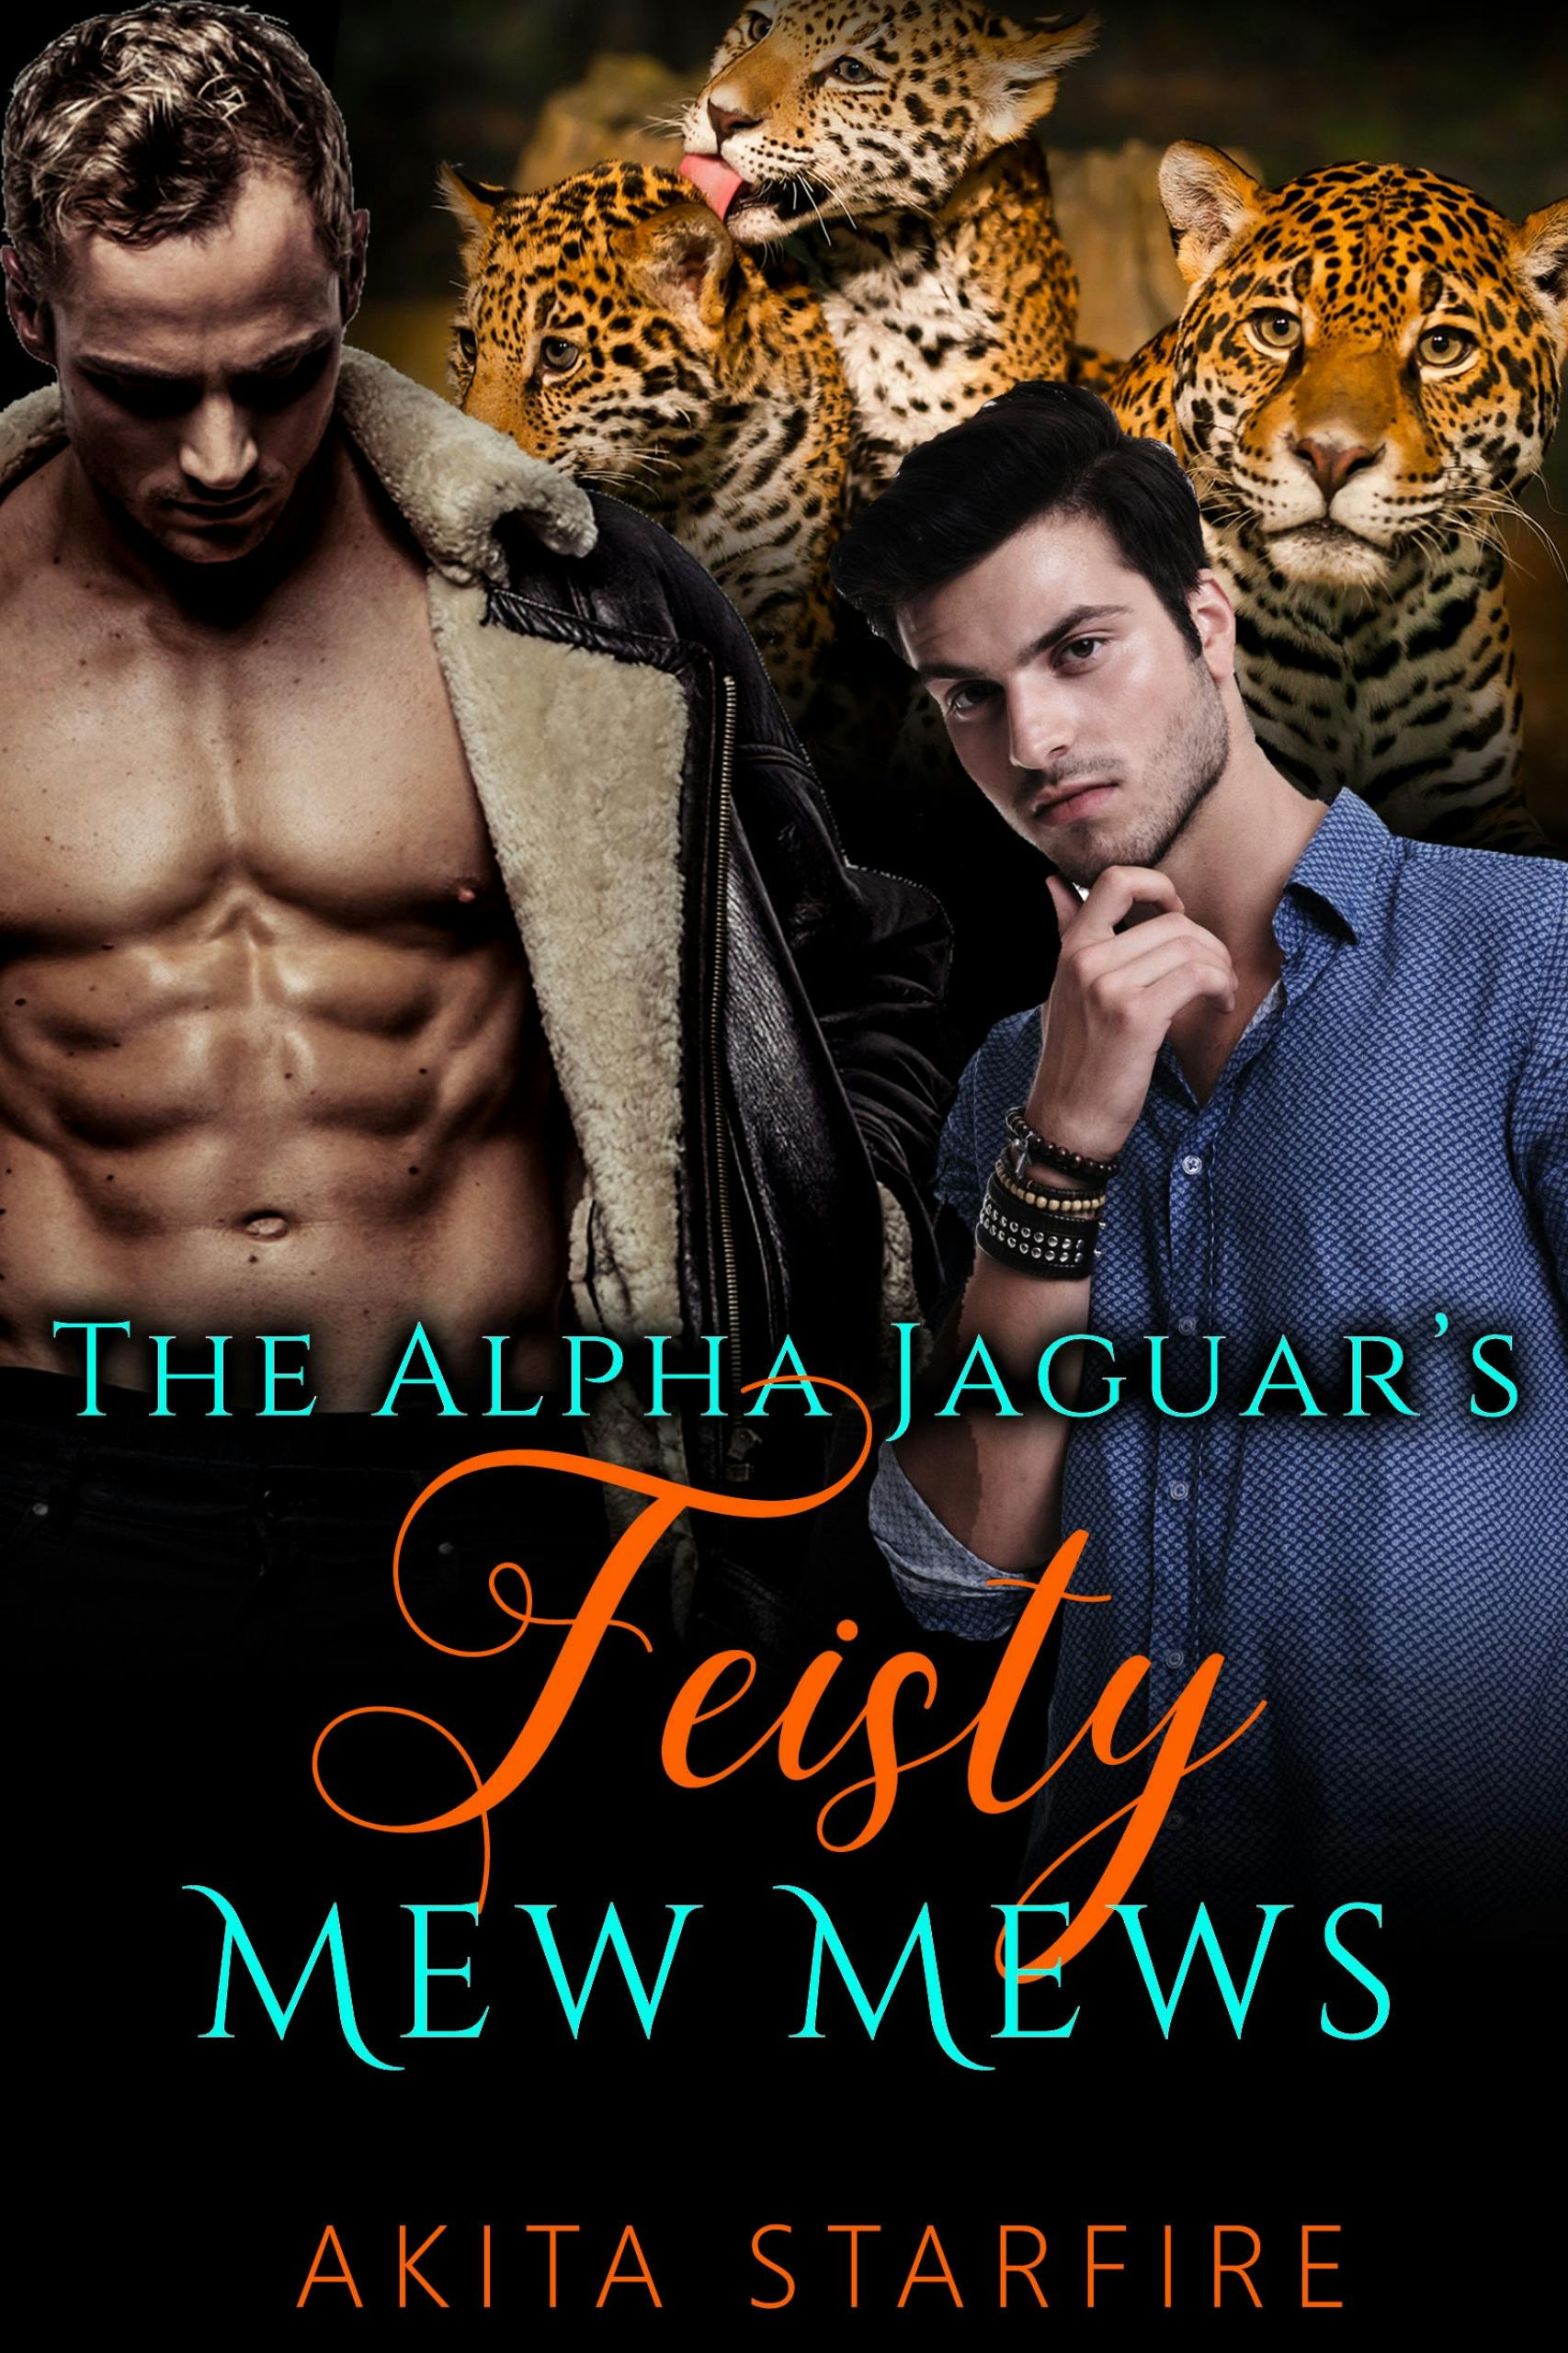 The Alpha Jaguar's Feisty Mew Mews - Akita StarFire